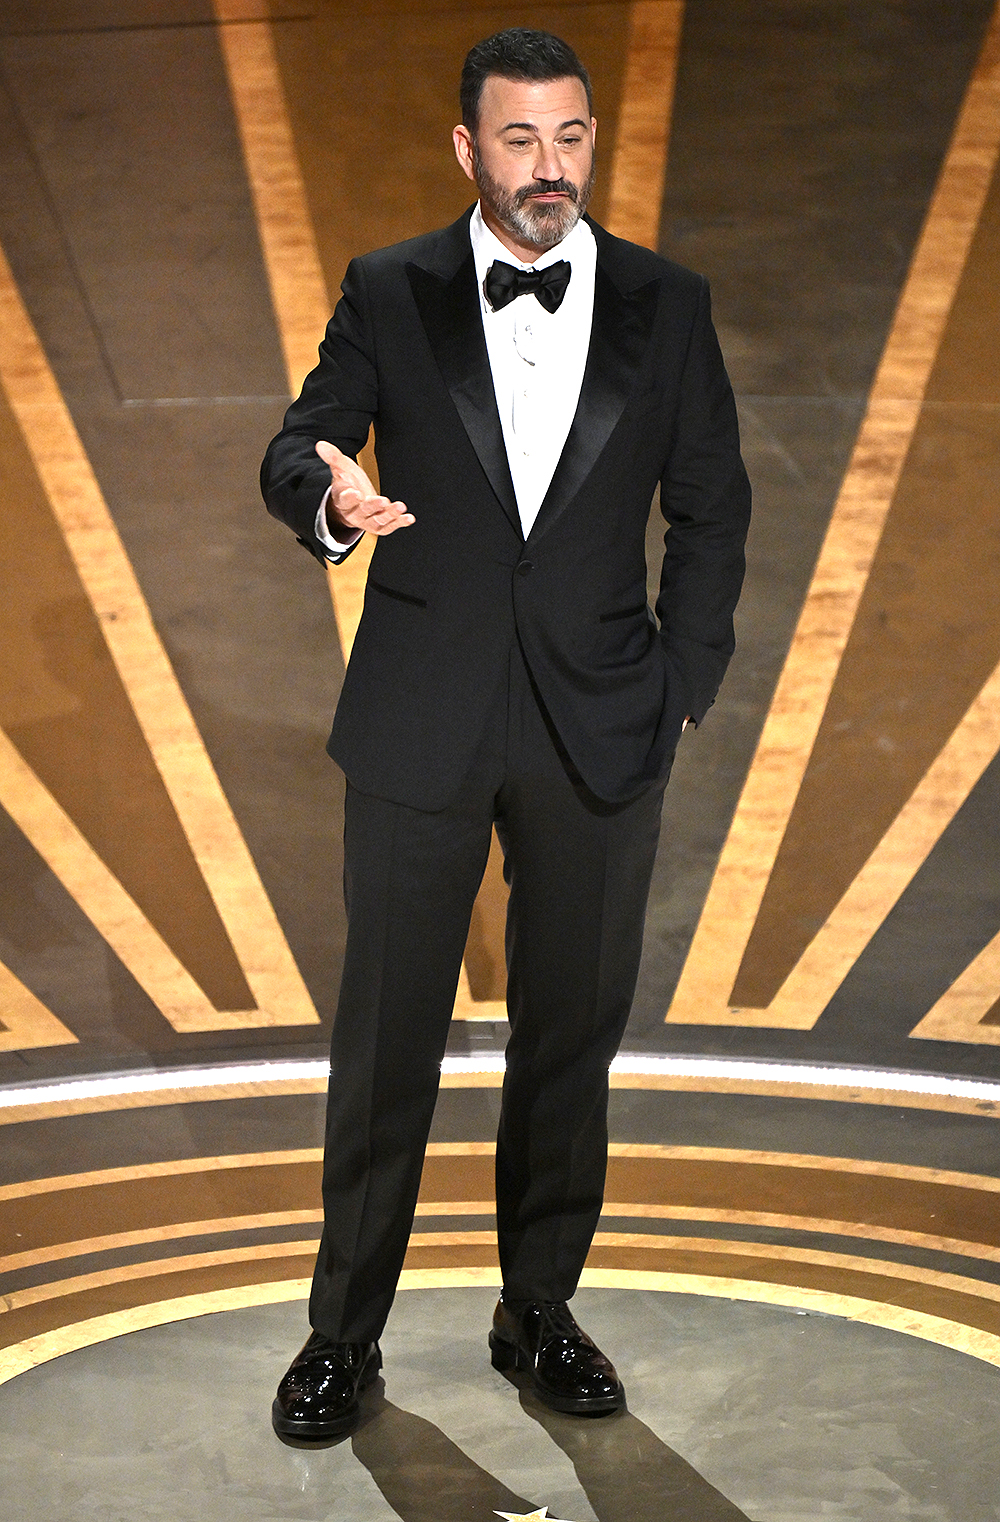 Ke Huy Quan Hugs ‘Indiana Jones’ Co-Star Harrison Ford During Emotional Reunion At The Oscars